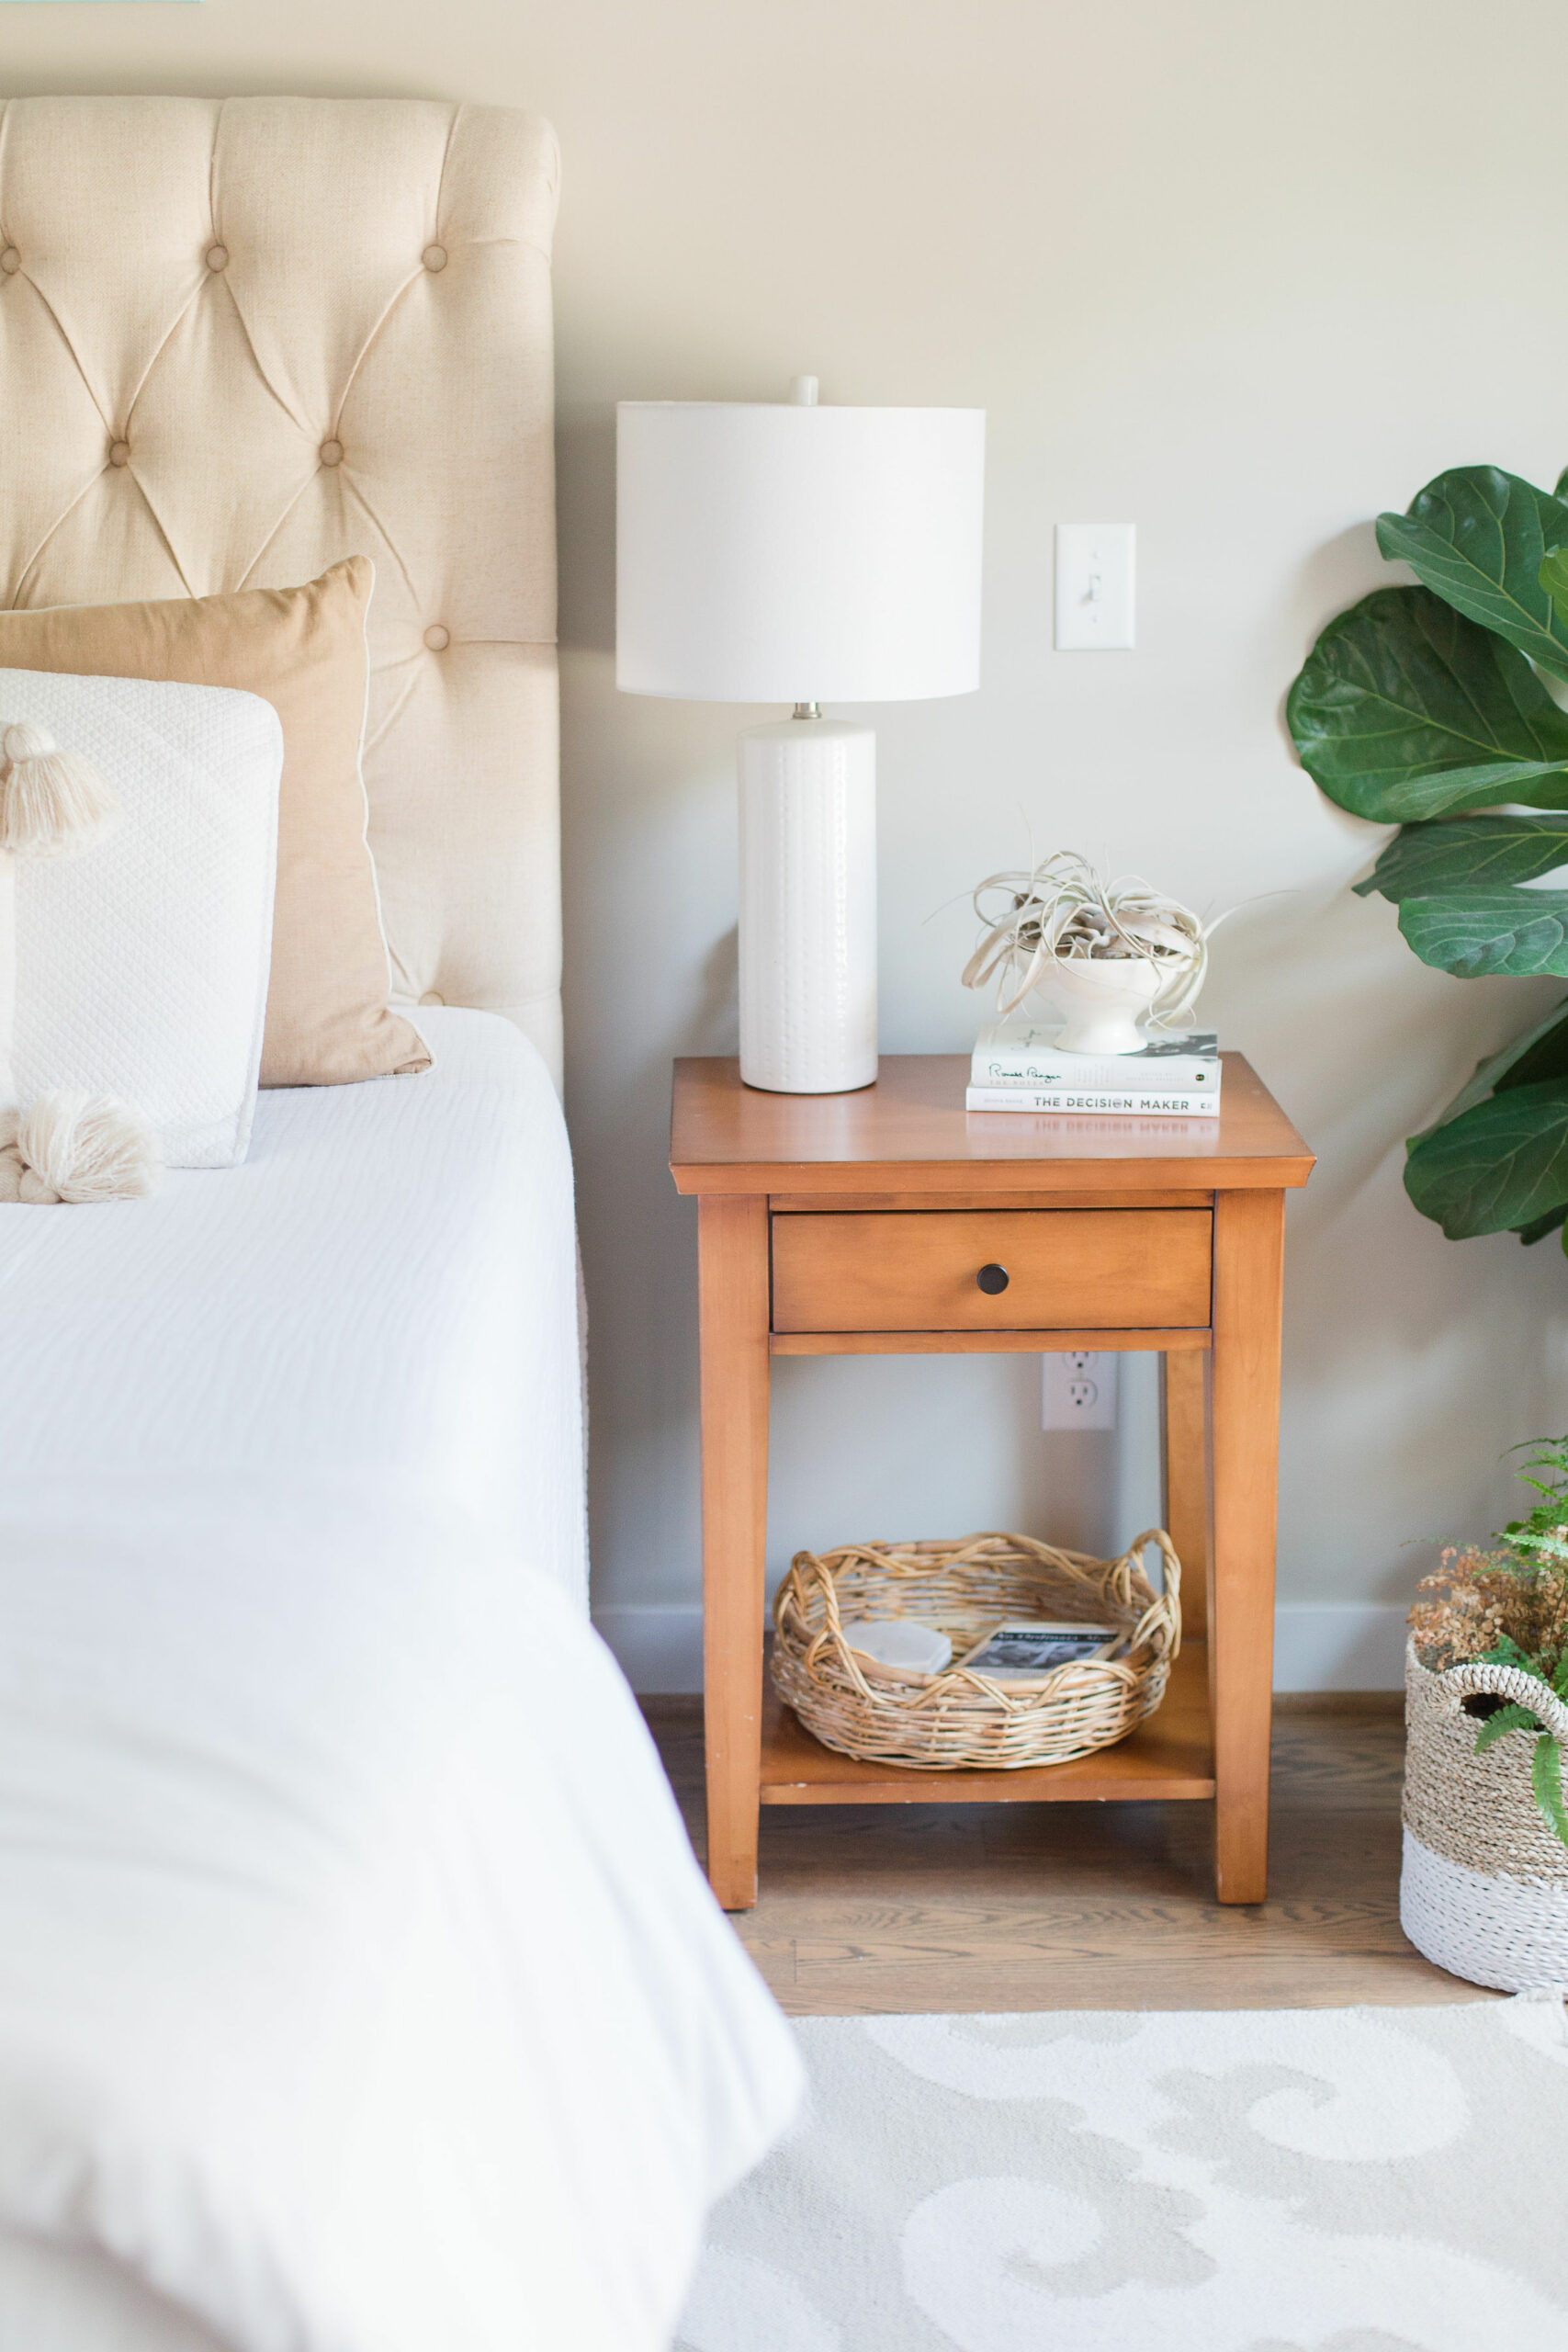 Bed, nightstand with lamp, houseplants